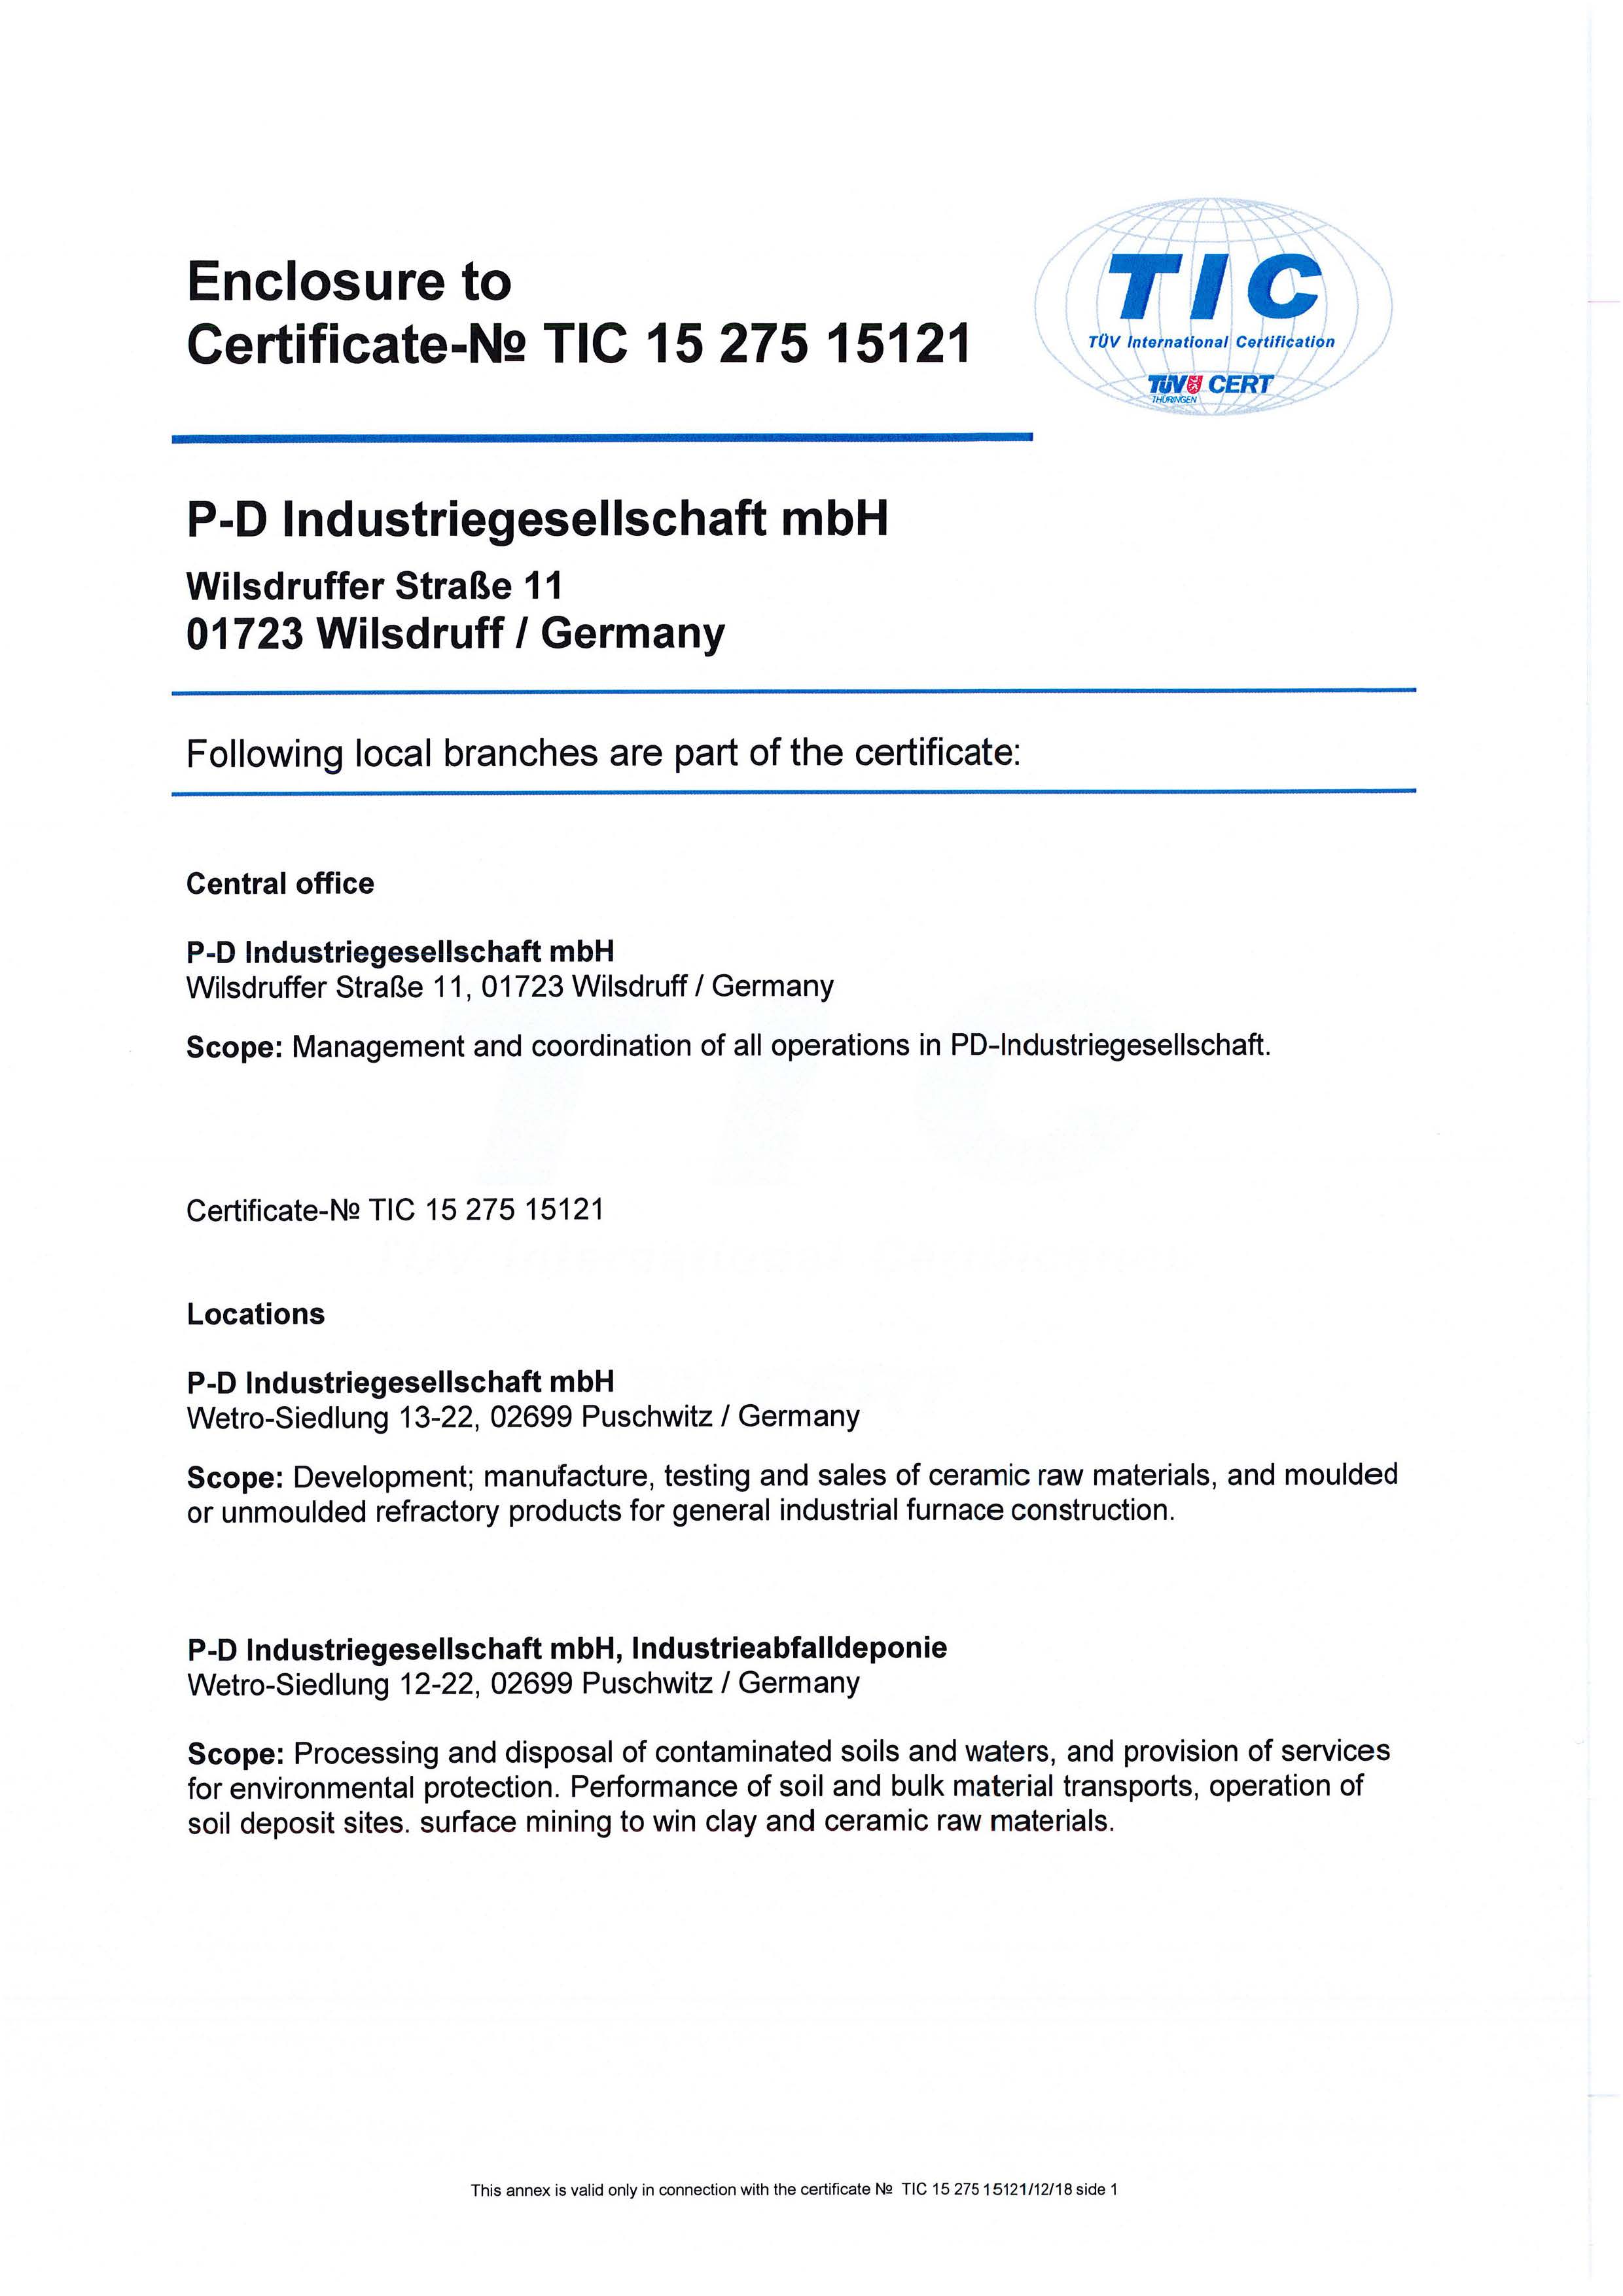 P-D Industriegesellschaft mbH · DIN EN ISO 50001:2018 (Enclosure)